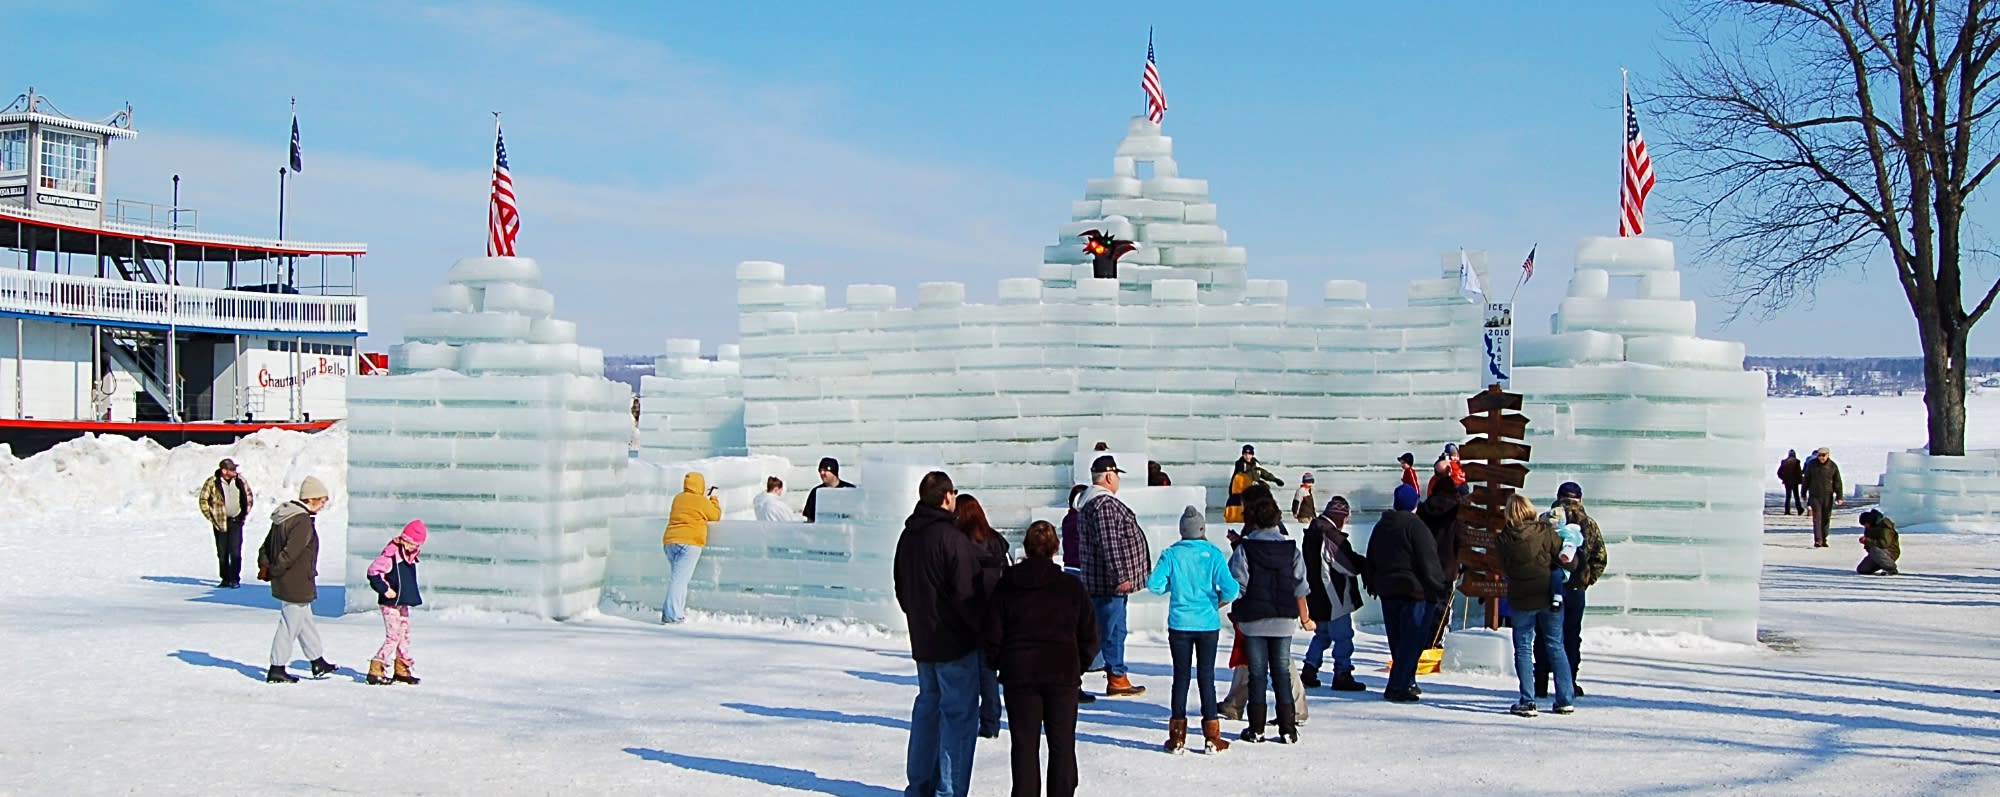 President's Day Winter Festival - Ice Castle - Mayville Lakeside Park on Chautauqua Lake